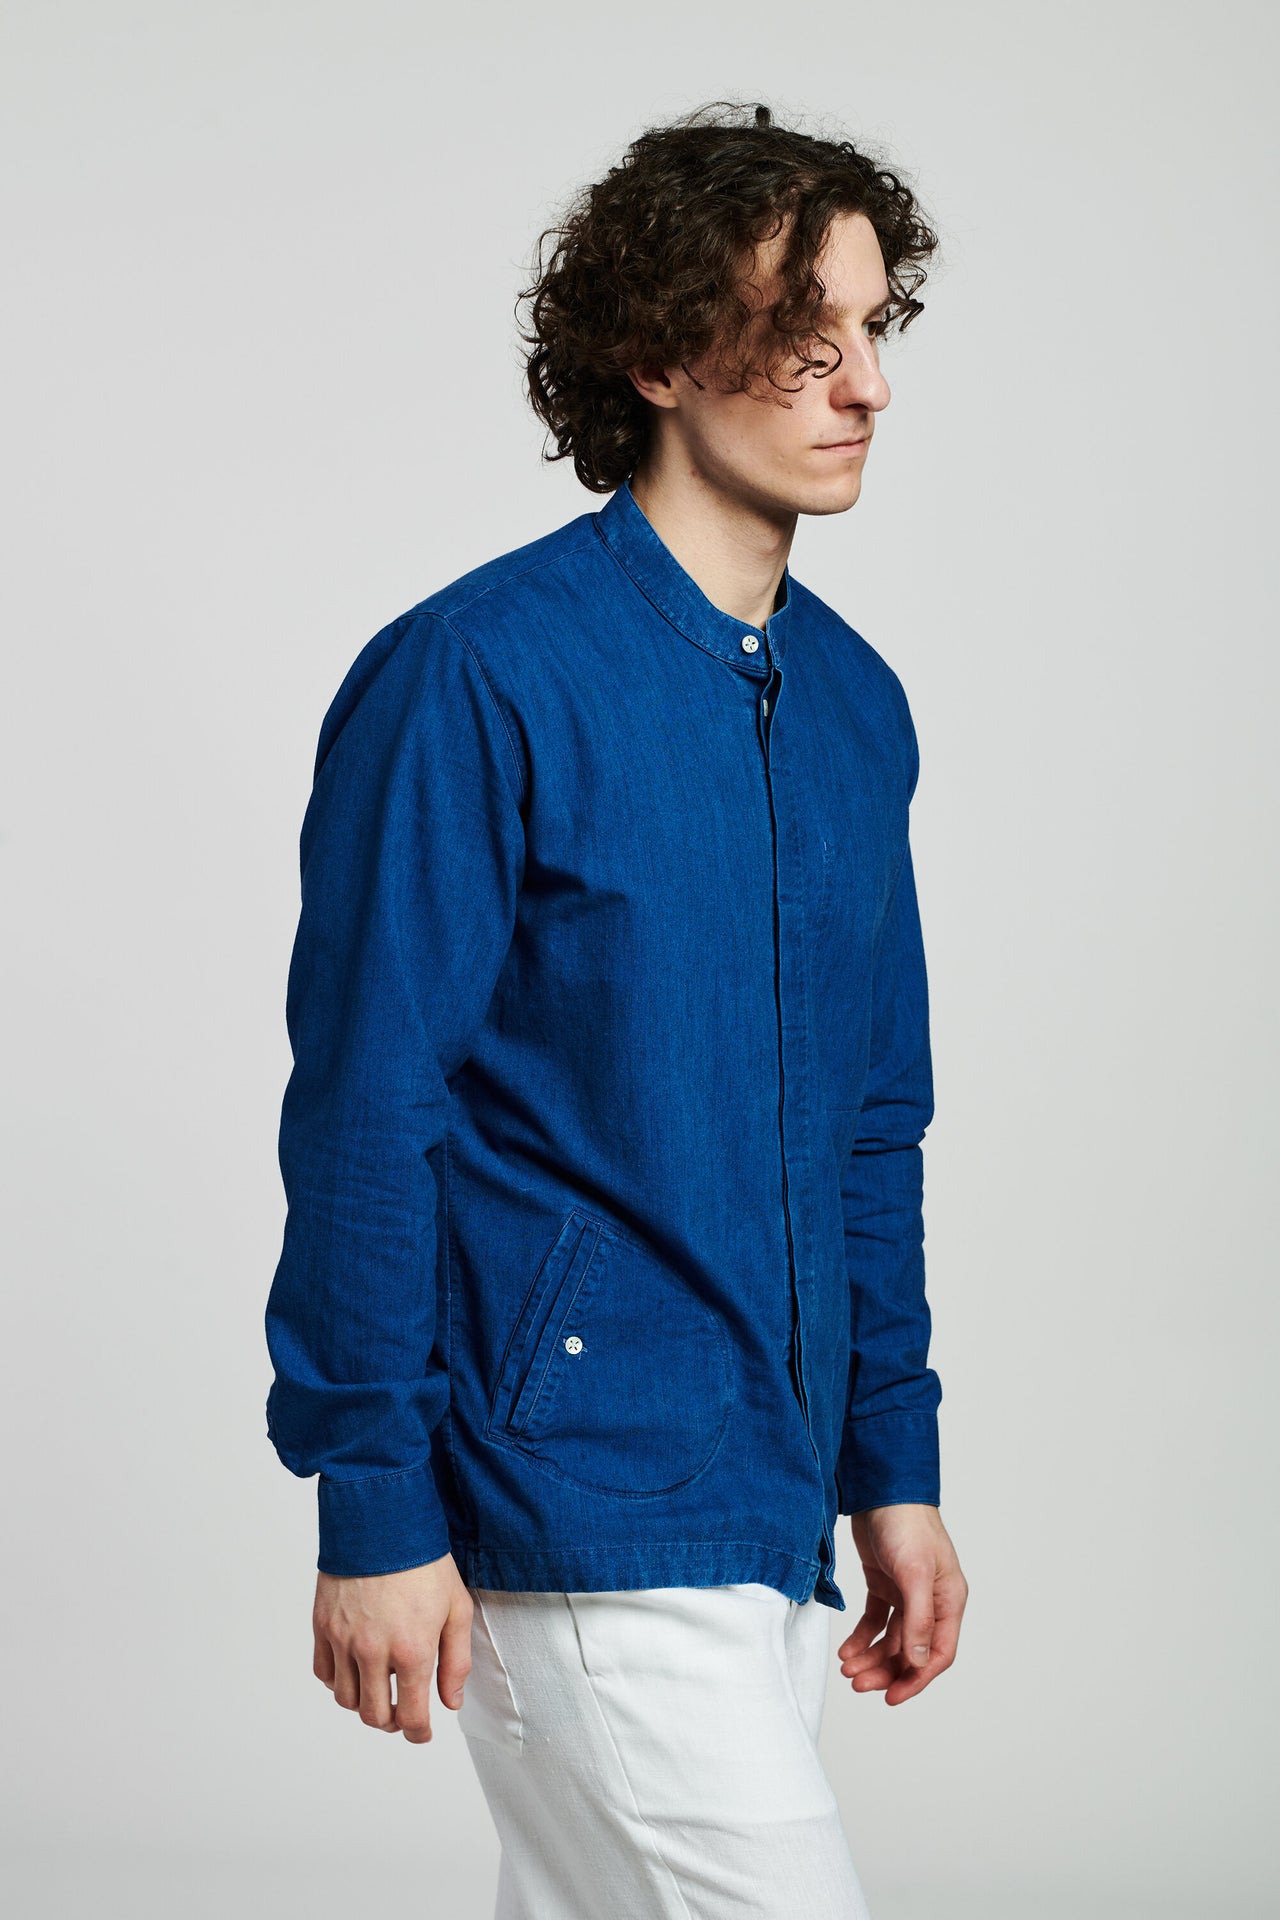 Confident Overshirt in a Bright Blue Indigo Dyed Italian Cotton Denim